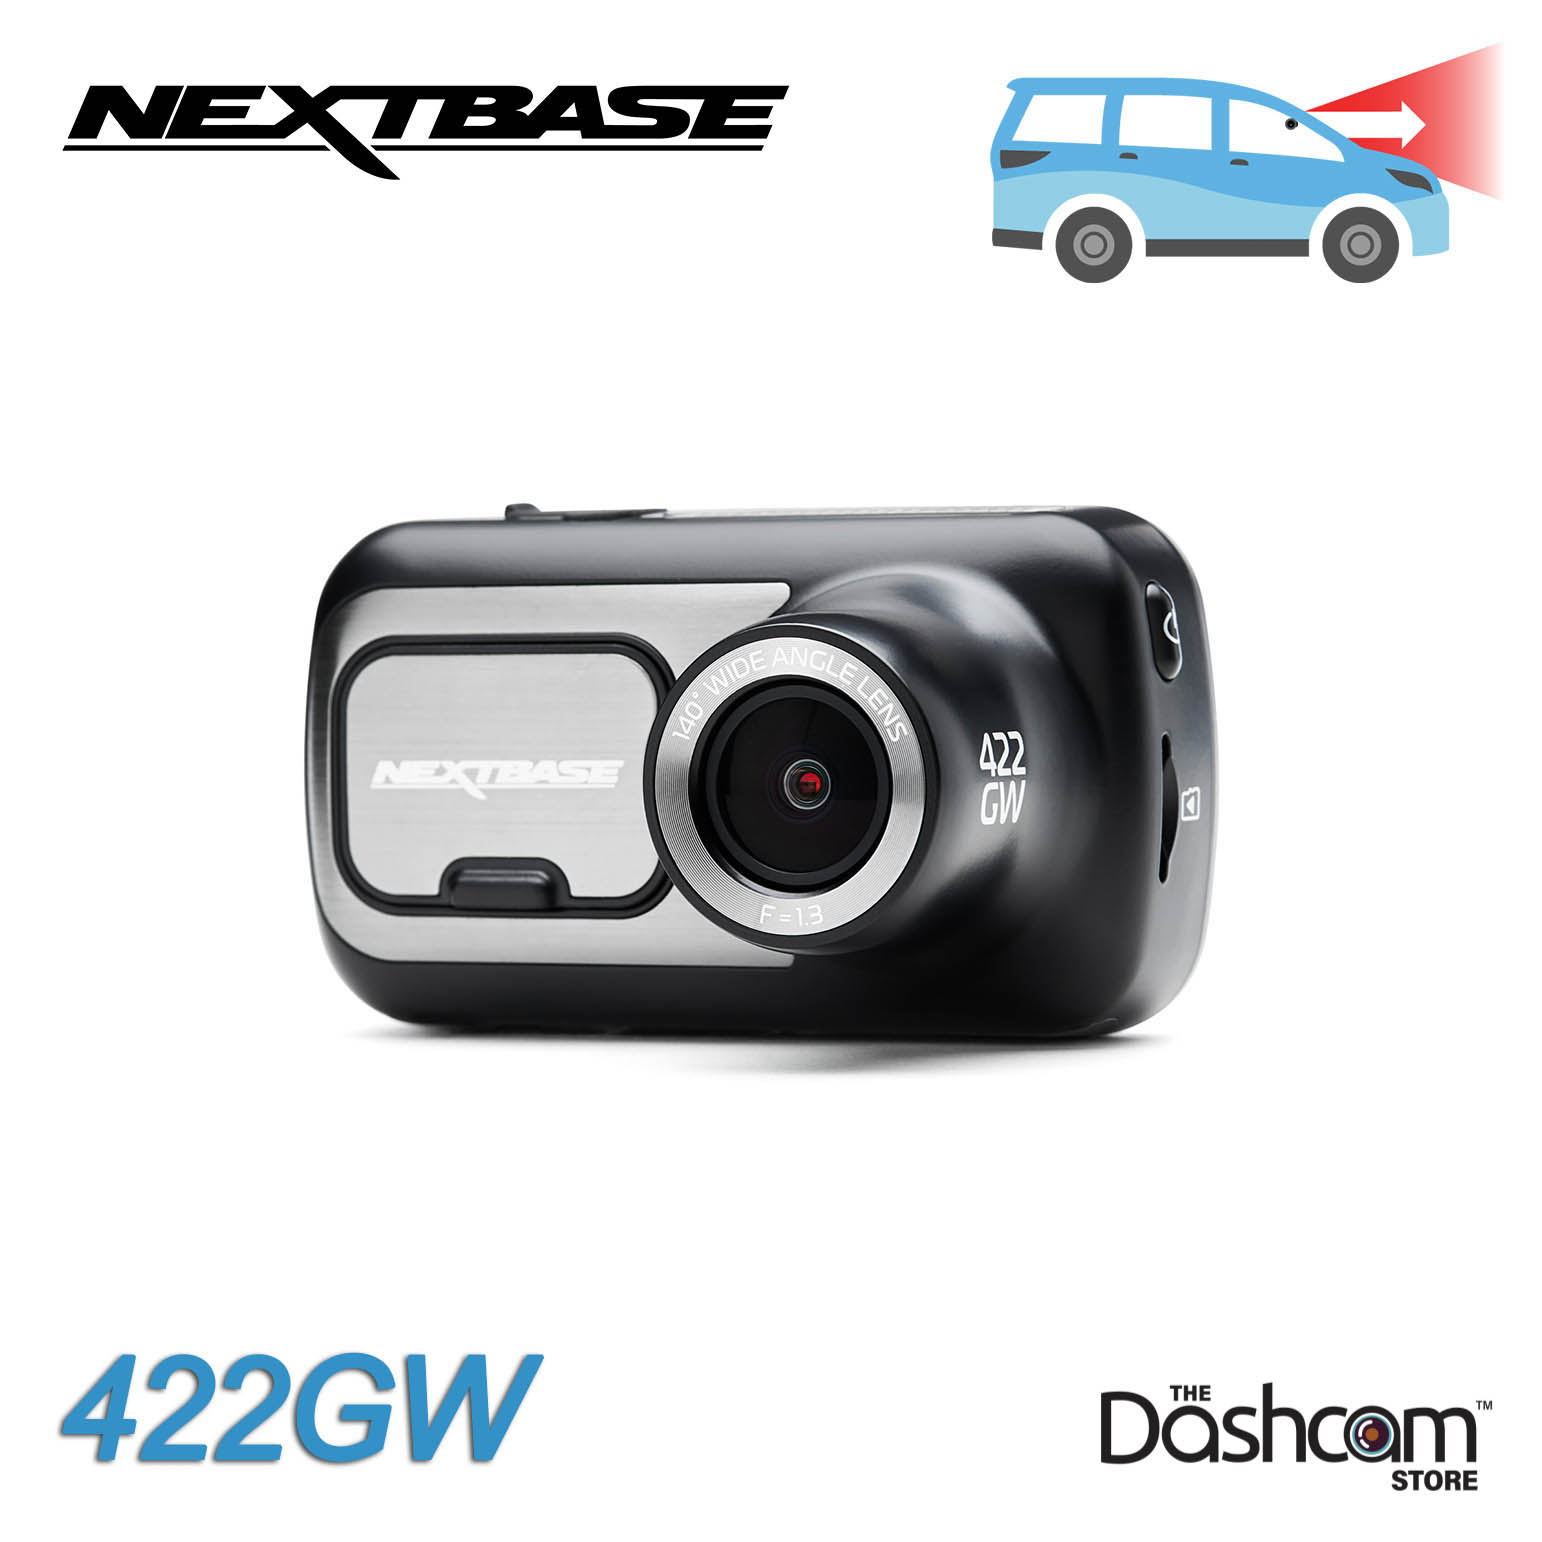 Plagen Verzakking Noodlottig Shop Nextbase 422GW 1440p Dashcam With Built-In Amazon Alexa